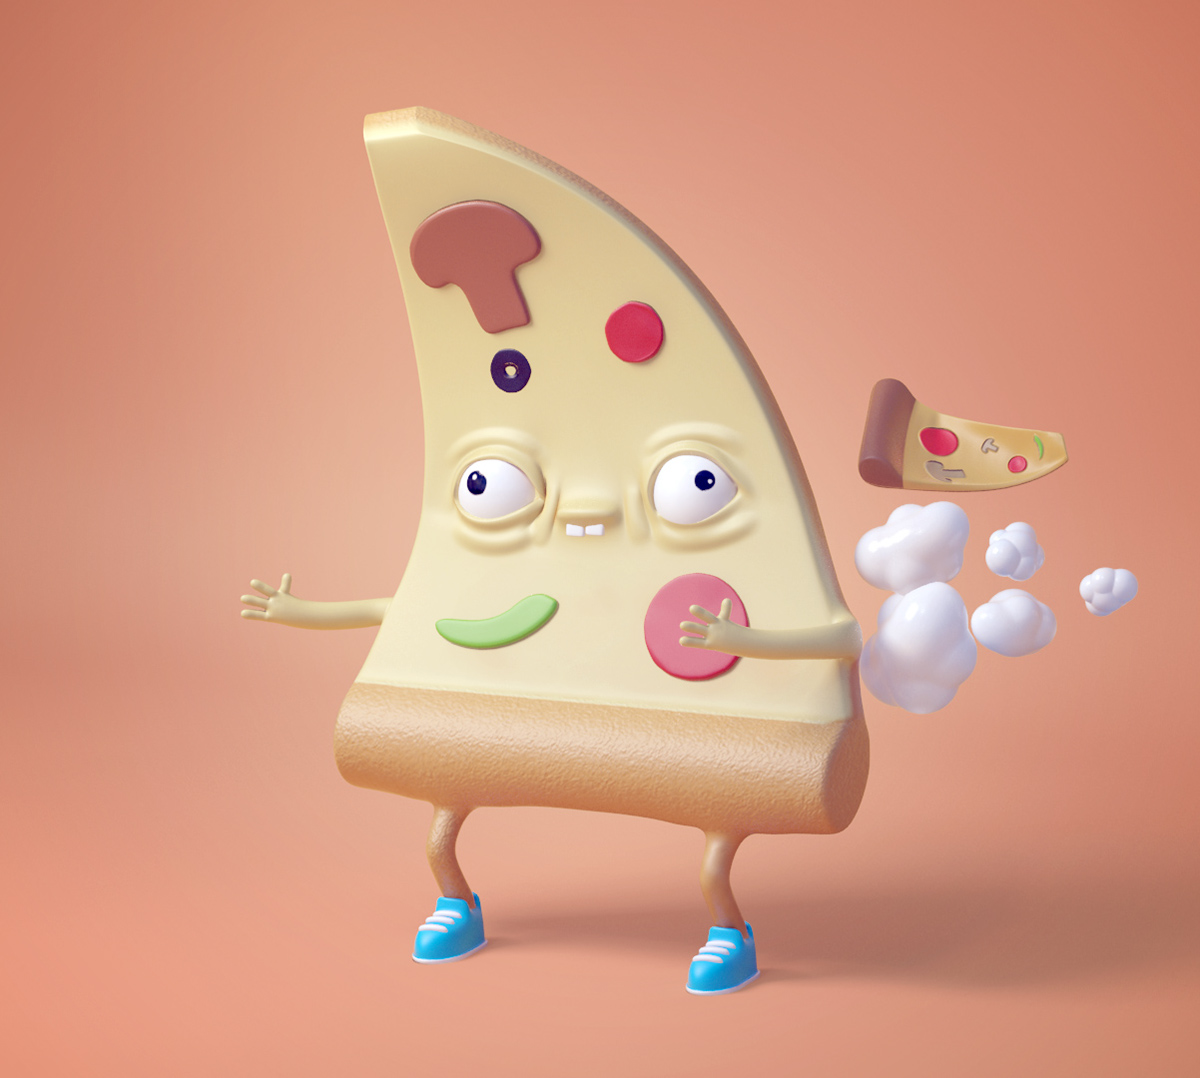 vray Zbrush Maya CG 3D art Pizza farts Food  cute colorful advertisng